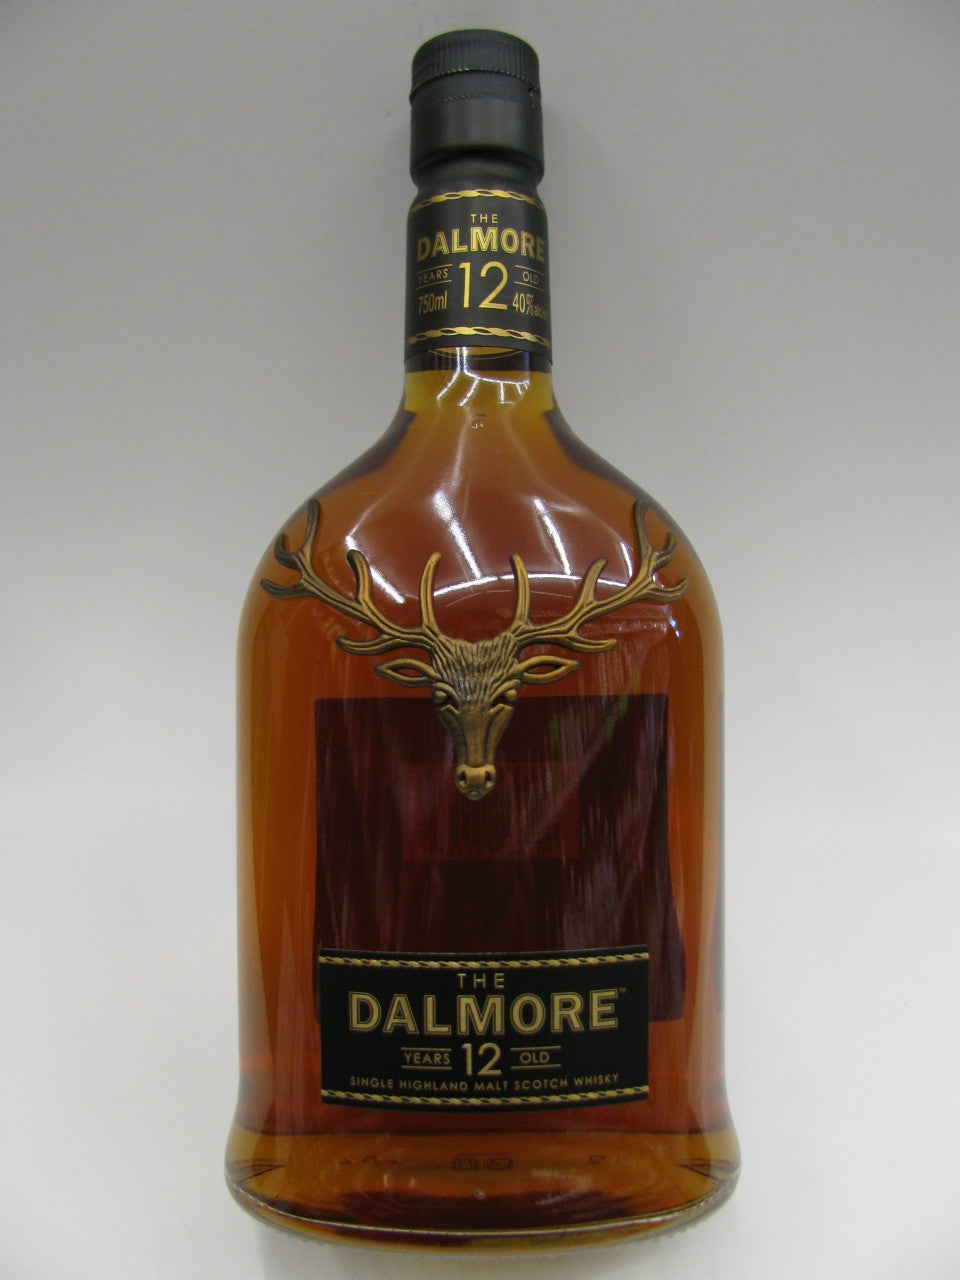 Dalmore 12 Year Highland Single Malt Scotch